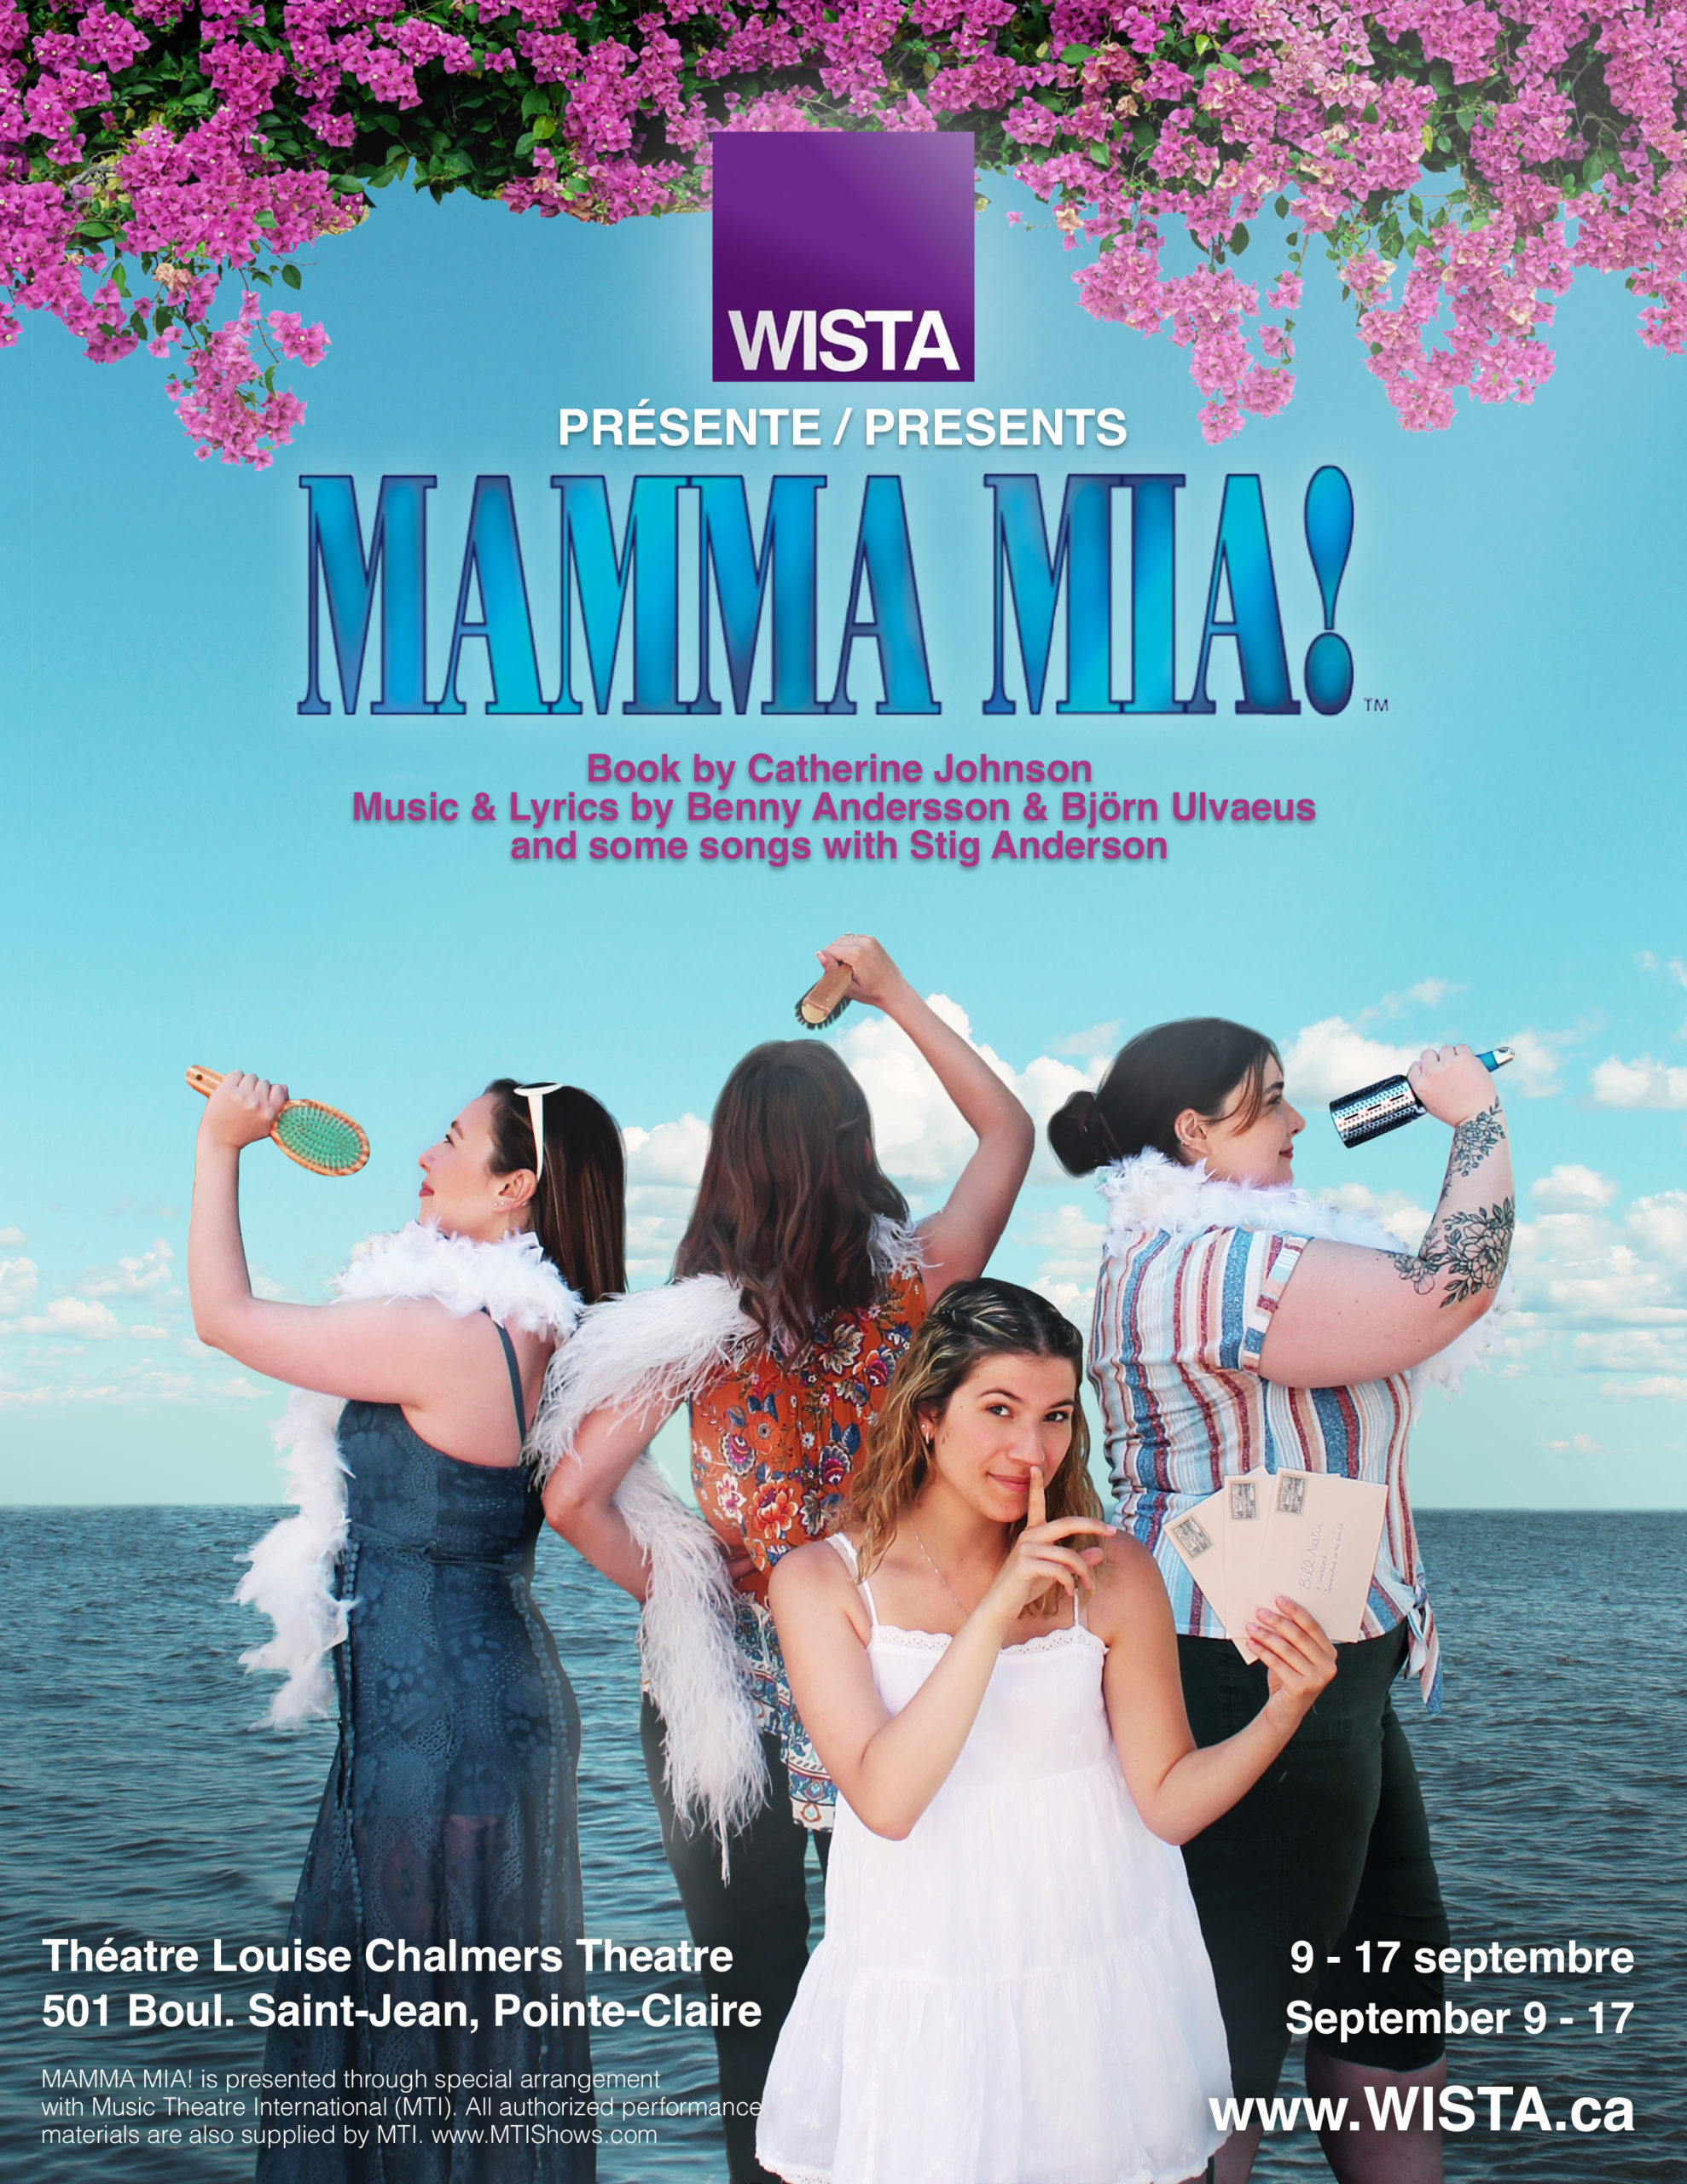 Take a Chance on WISTA's Mamma Mia this fall - Mobtreal.com